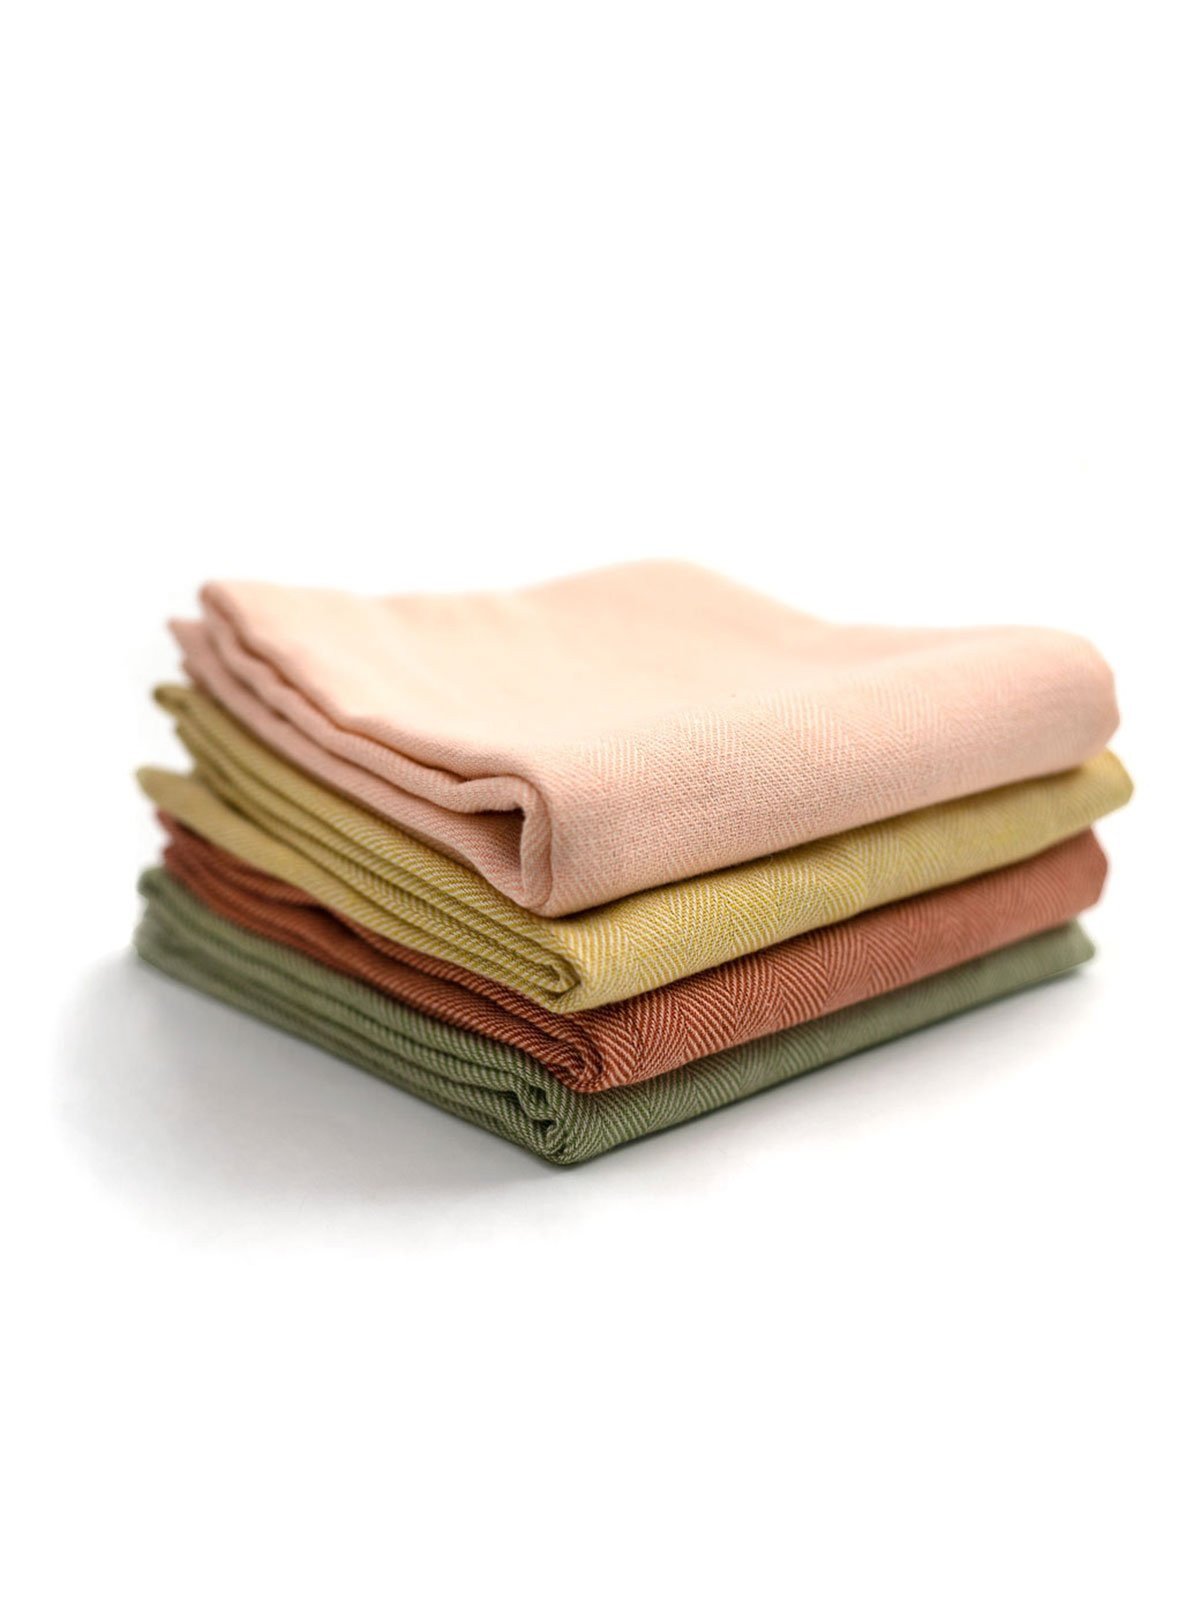 New Cotton Herringbone Dishcloth Kitchen Towels - 50LB Box